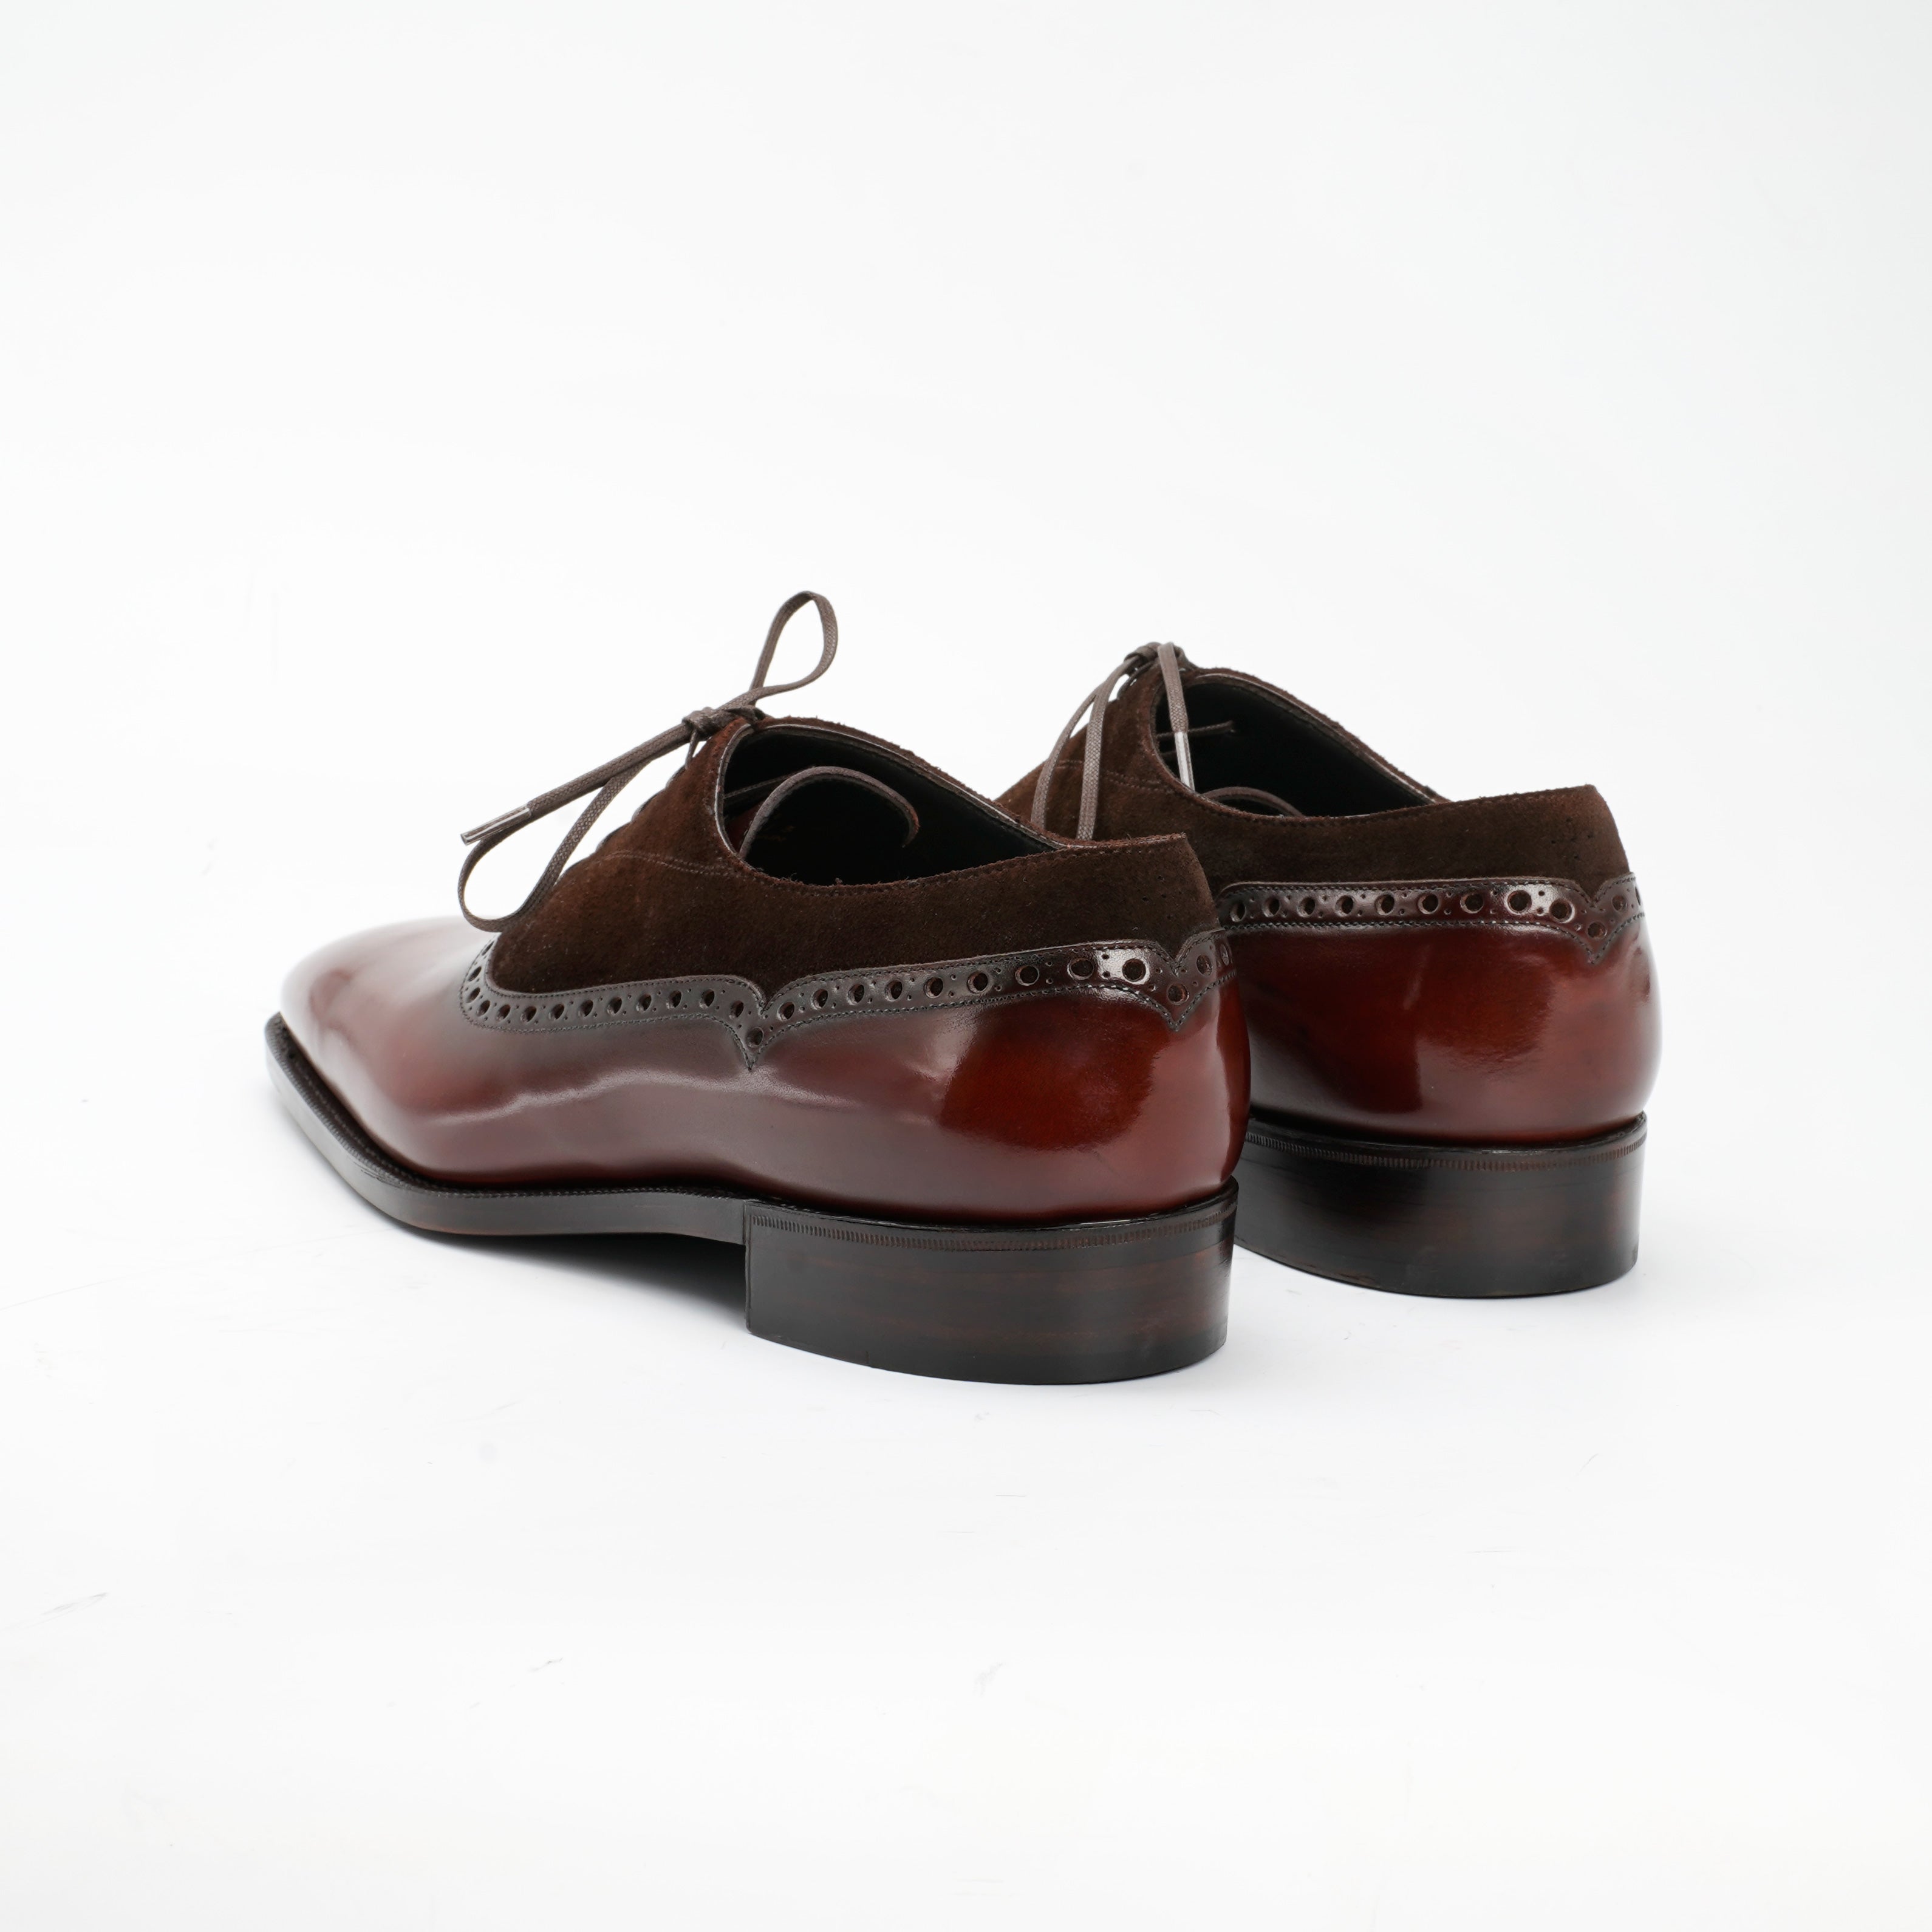 Federico Balmoral Oxford Shoe by Norman Vilalta Mens Oxford Shoes Spain